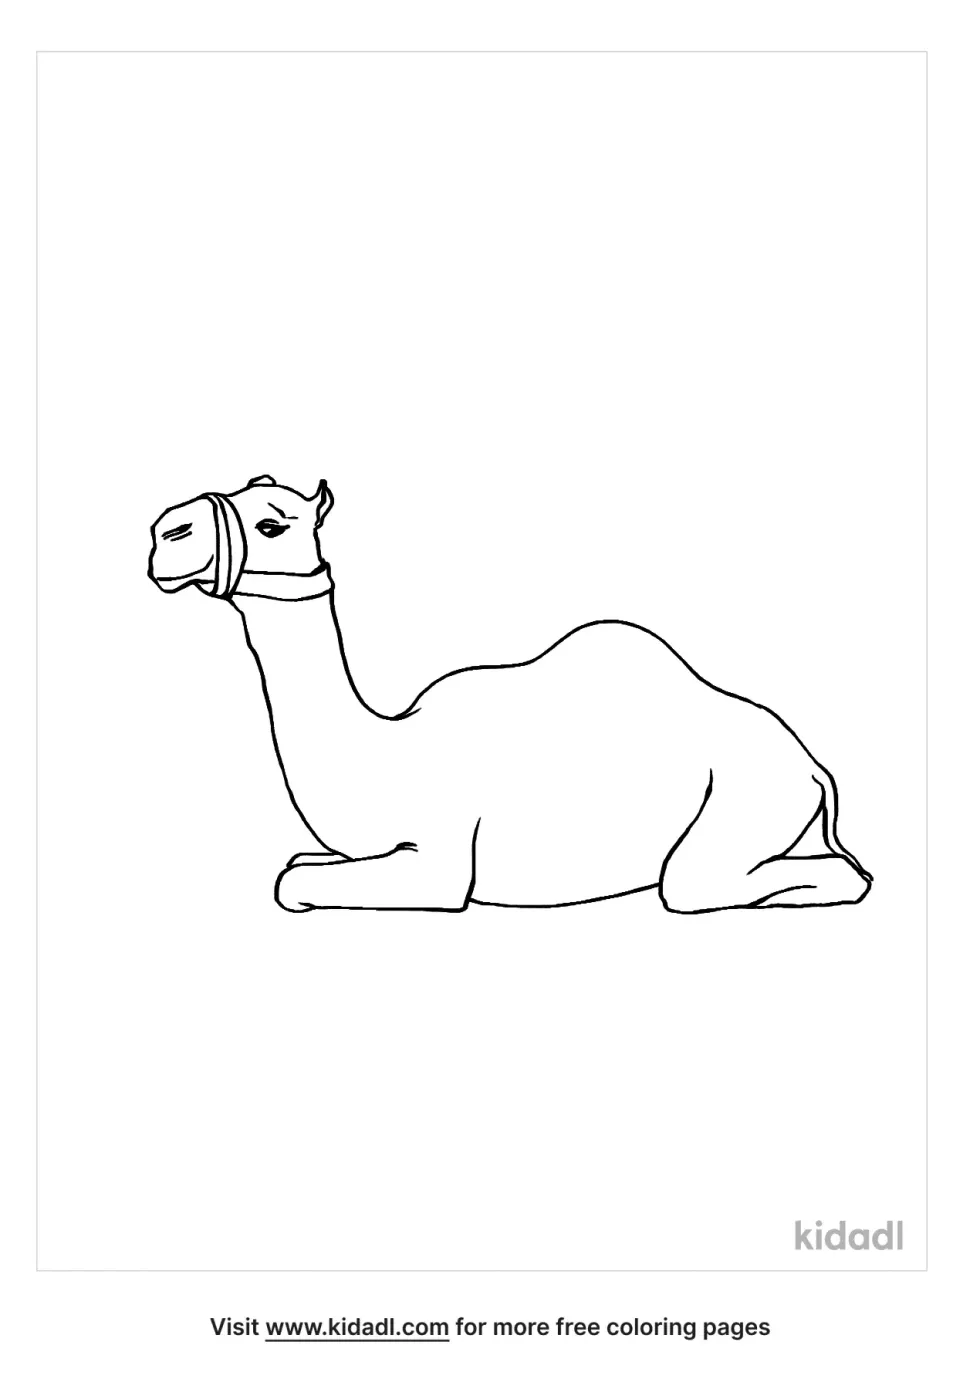 Camel Sitting Down